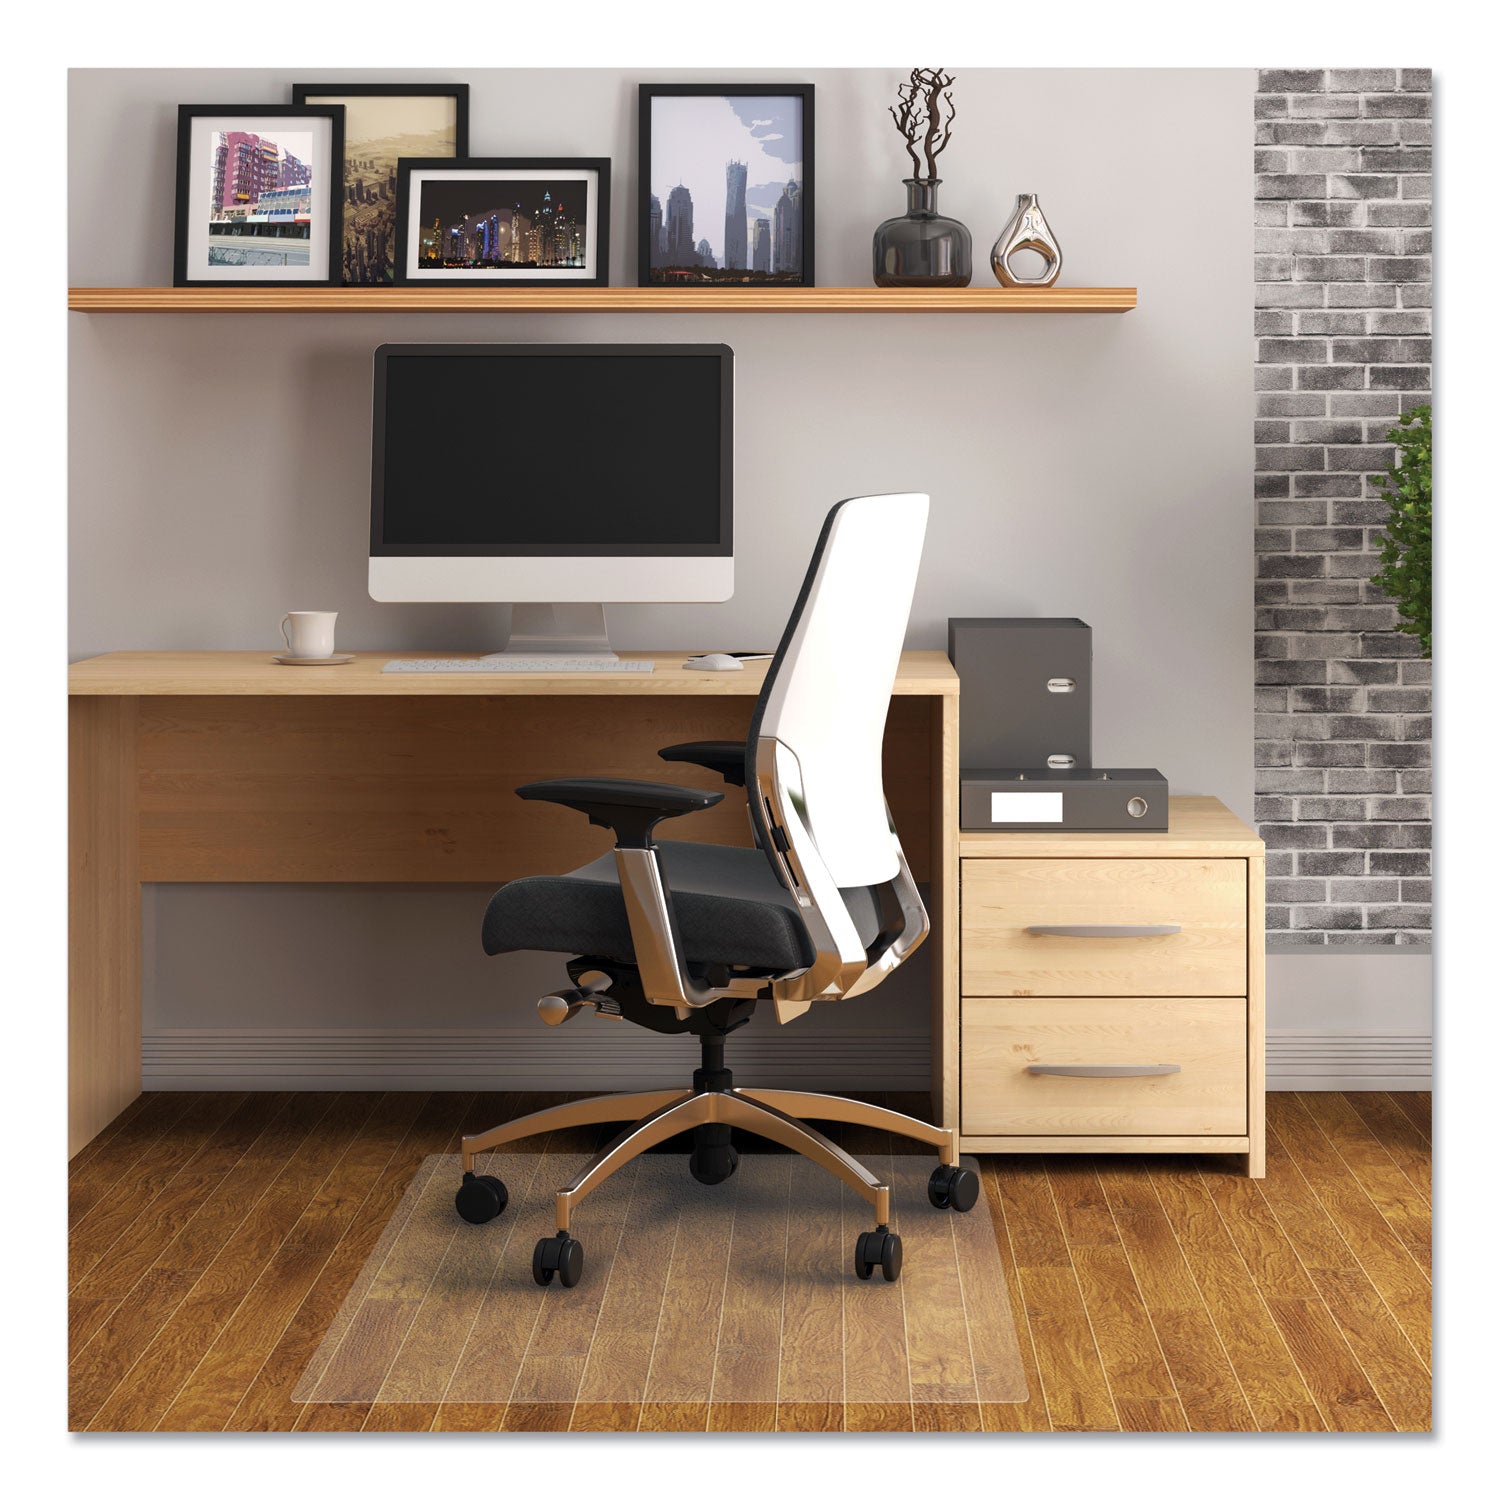 Cleartex Advantagemat Phthalate Free PVC Chair Mat for Hard Floors, 53 x 45, Clear - 